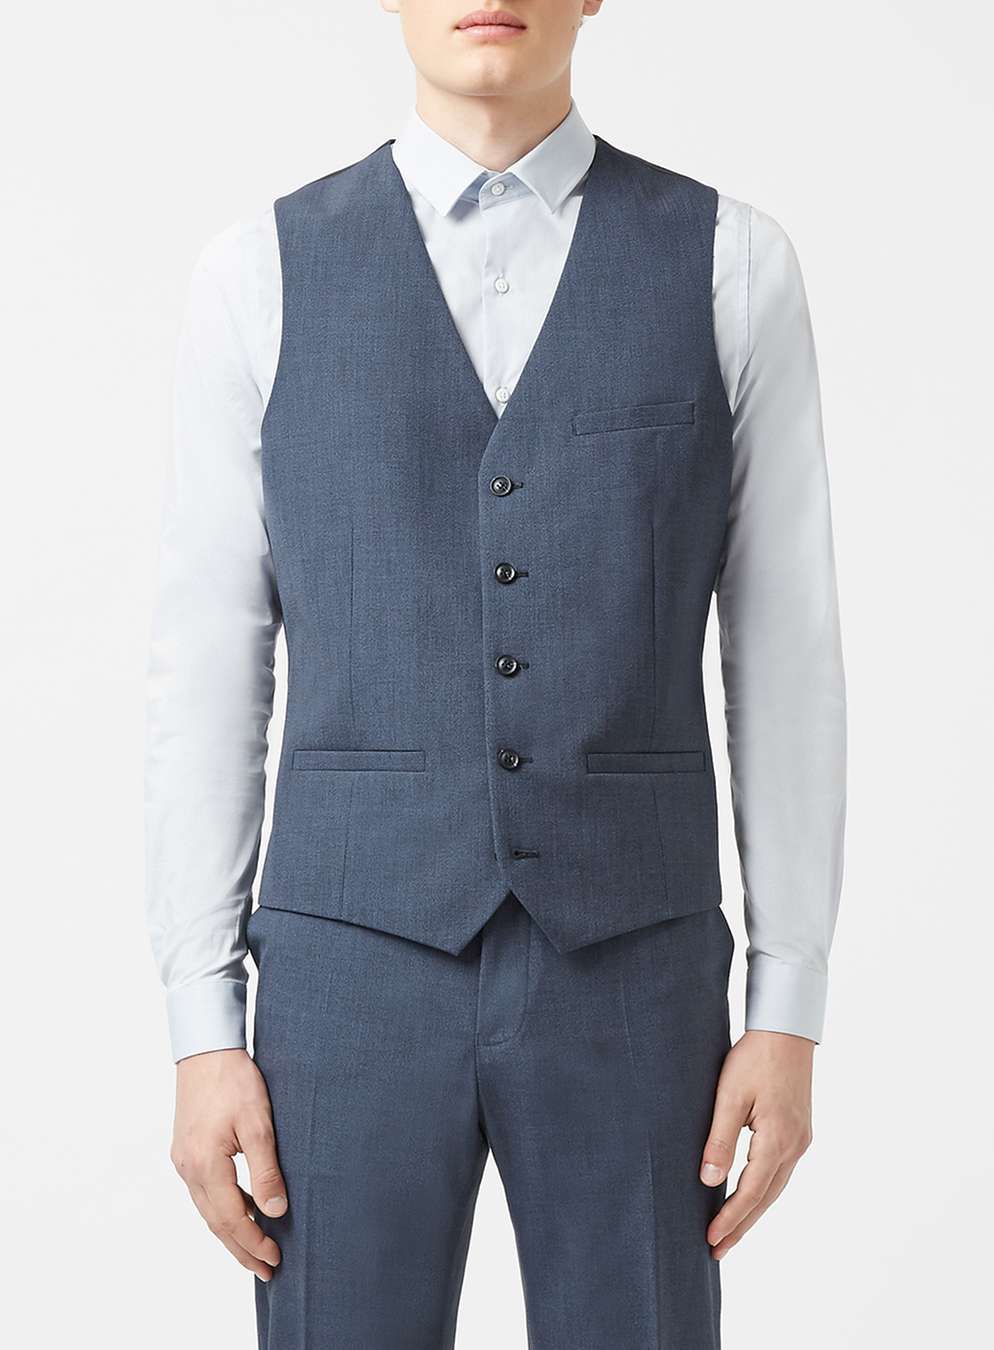 Indigo Blue Modern Fit Vest Size: 40